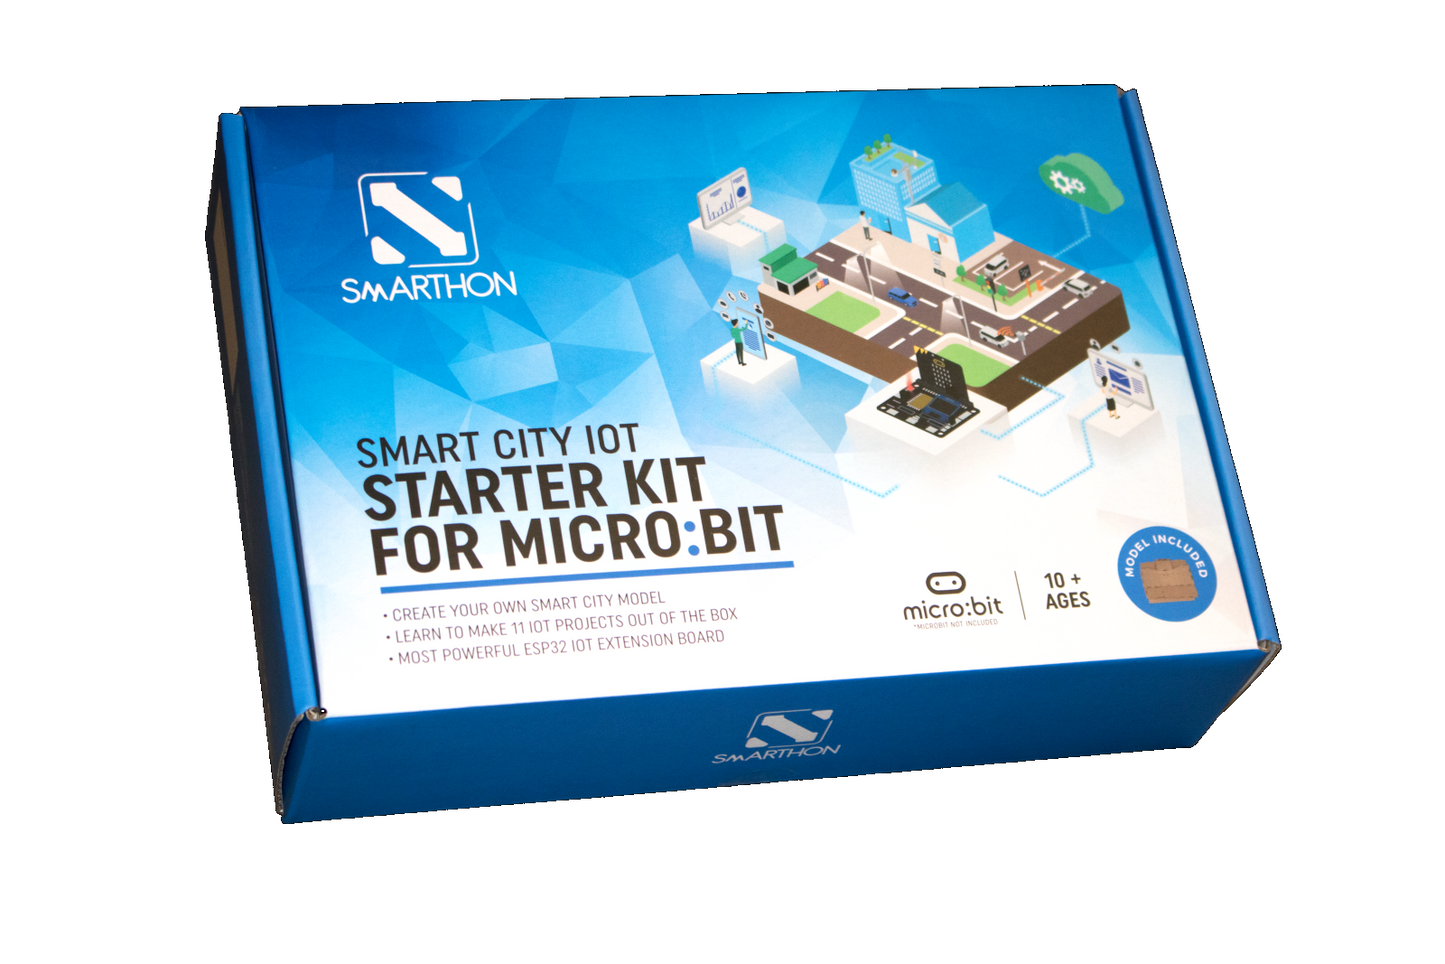 Smarthon - Smart City IoT Starter Kit for micro:bit